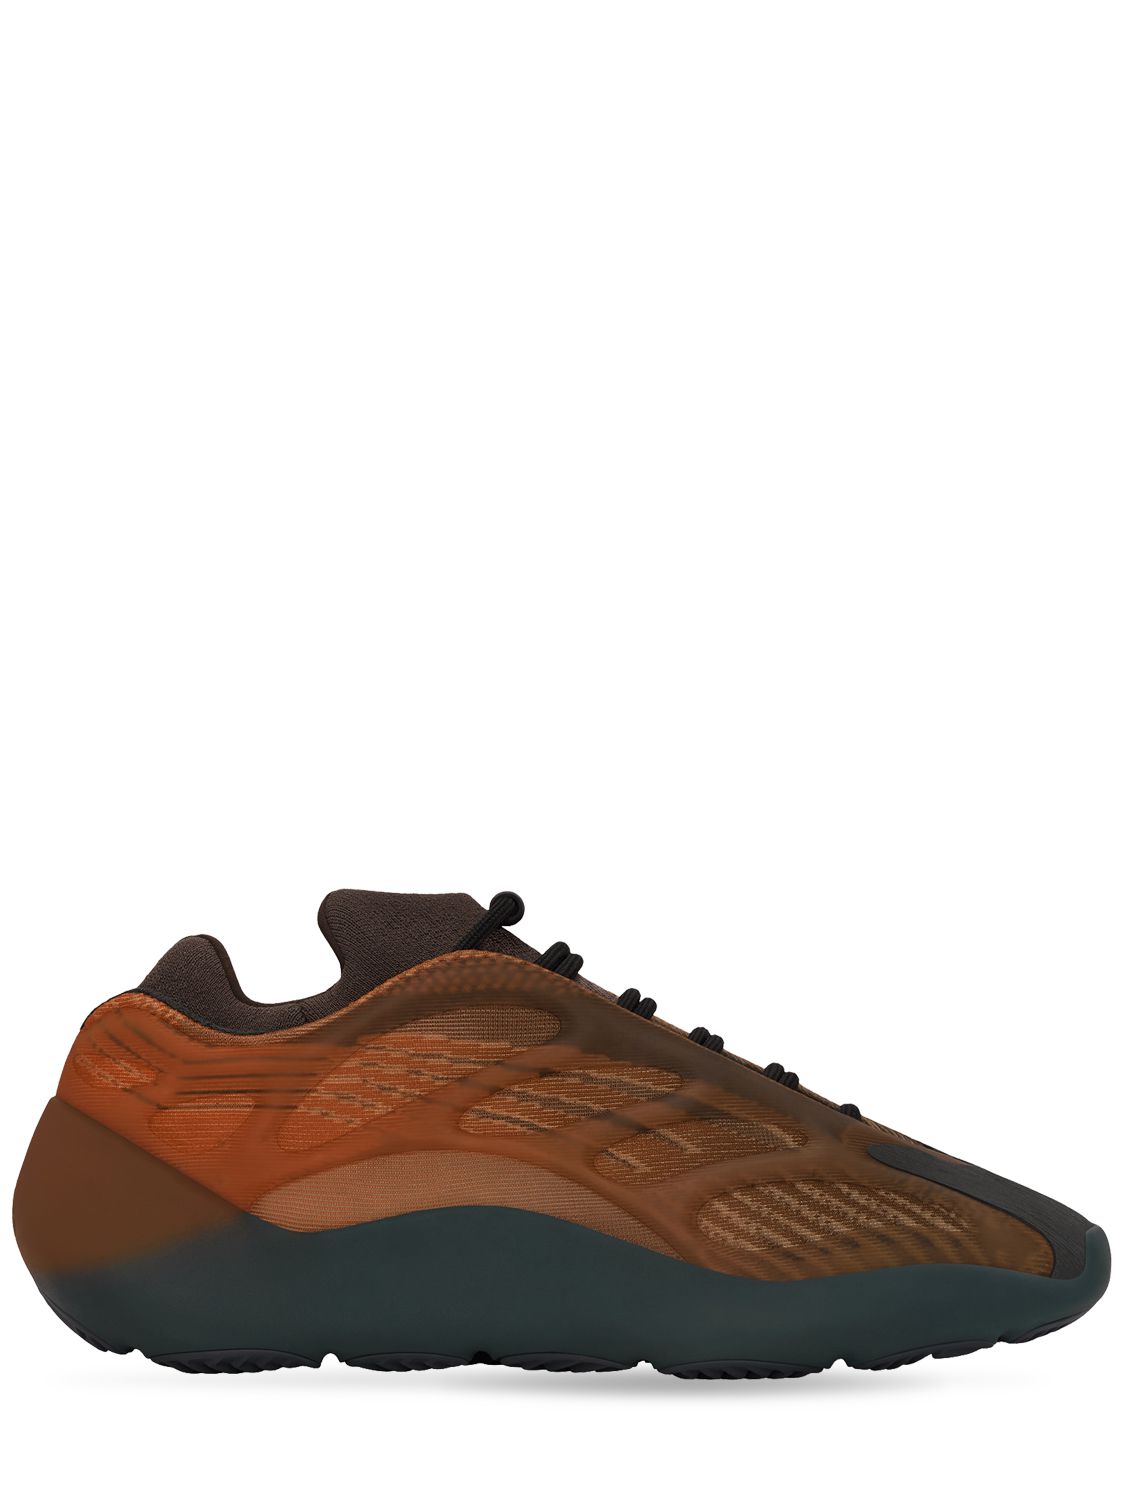 Yeezy Orange 700 V3 Sneakers In Copper Fade